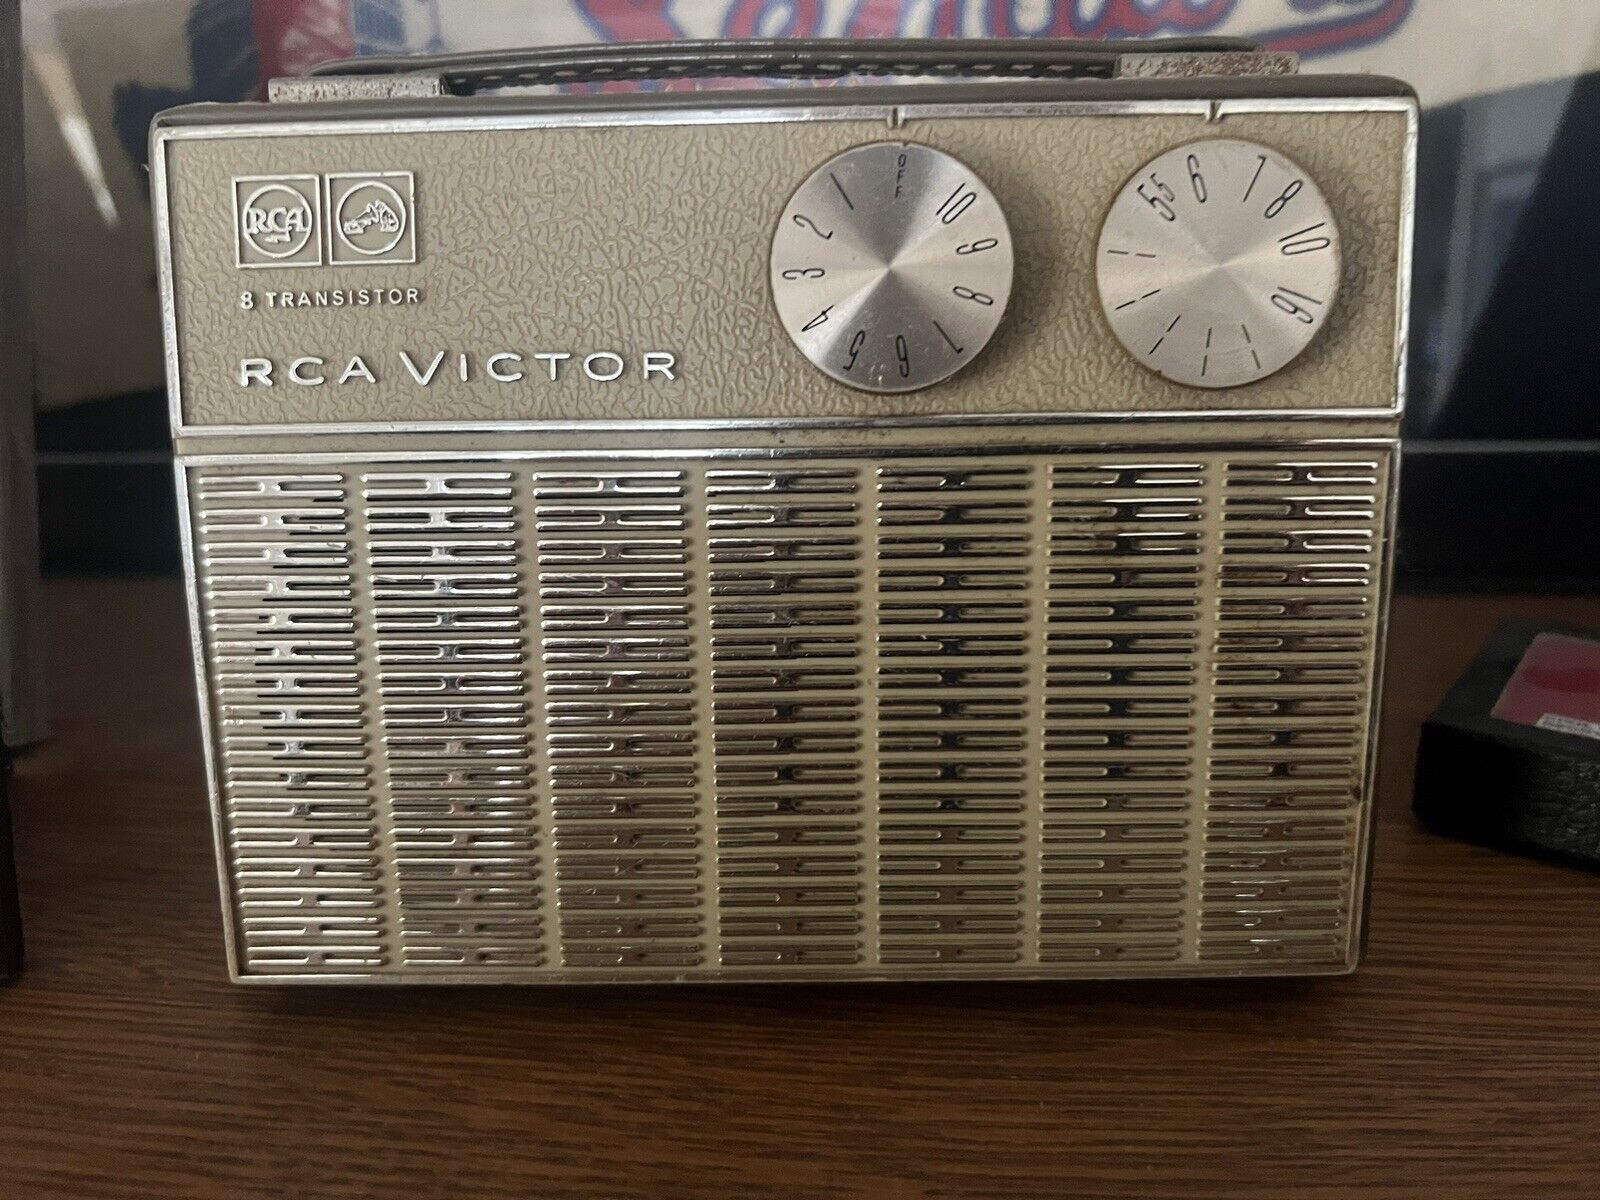 rca victor 8 transistor Radio